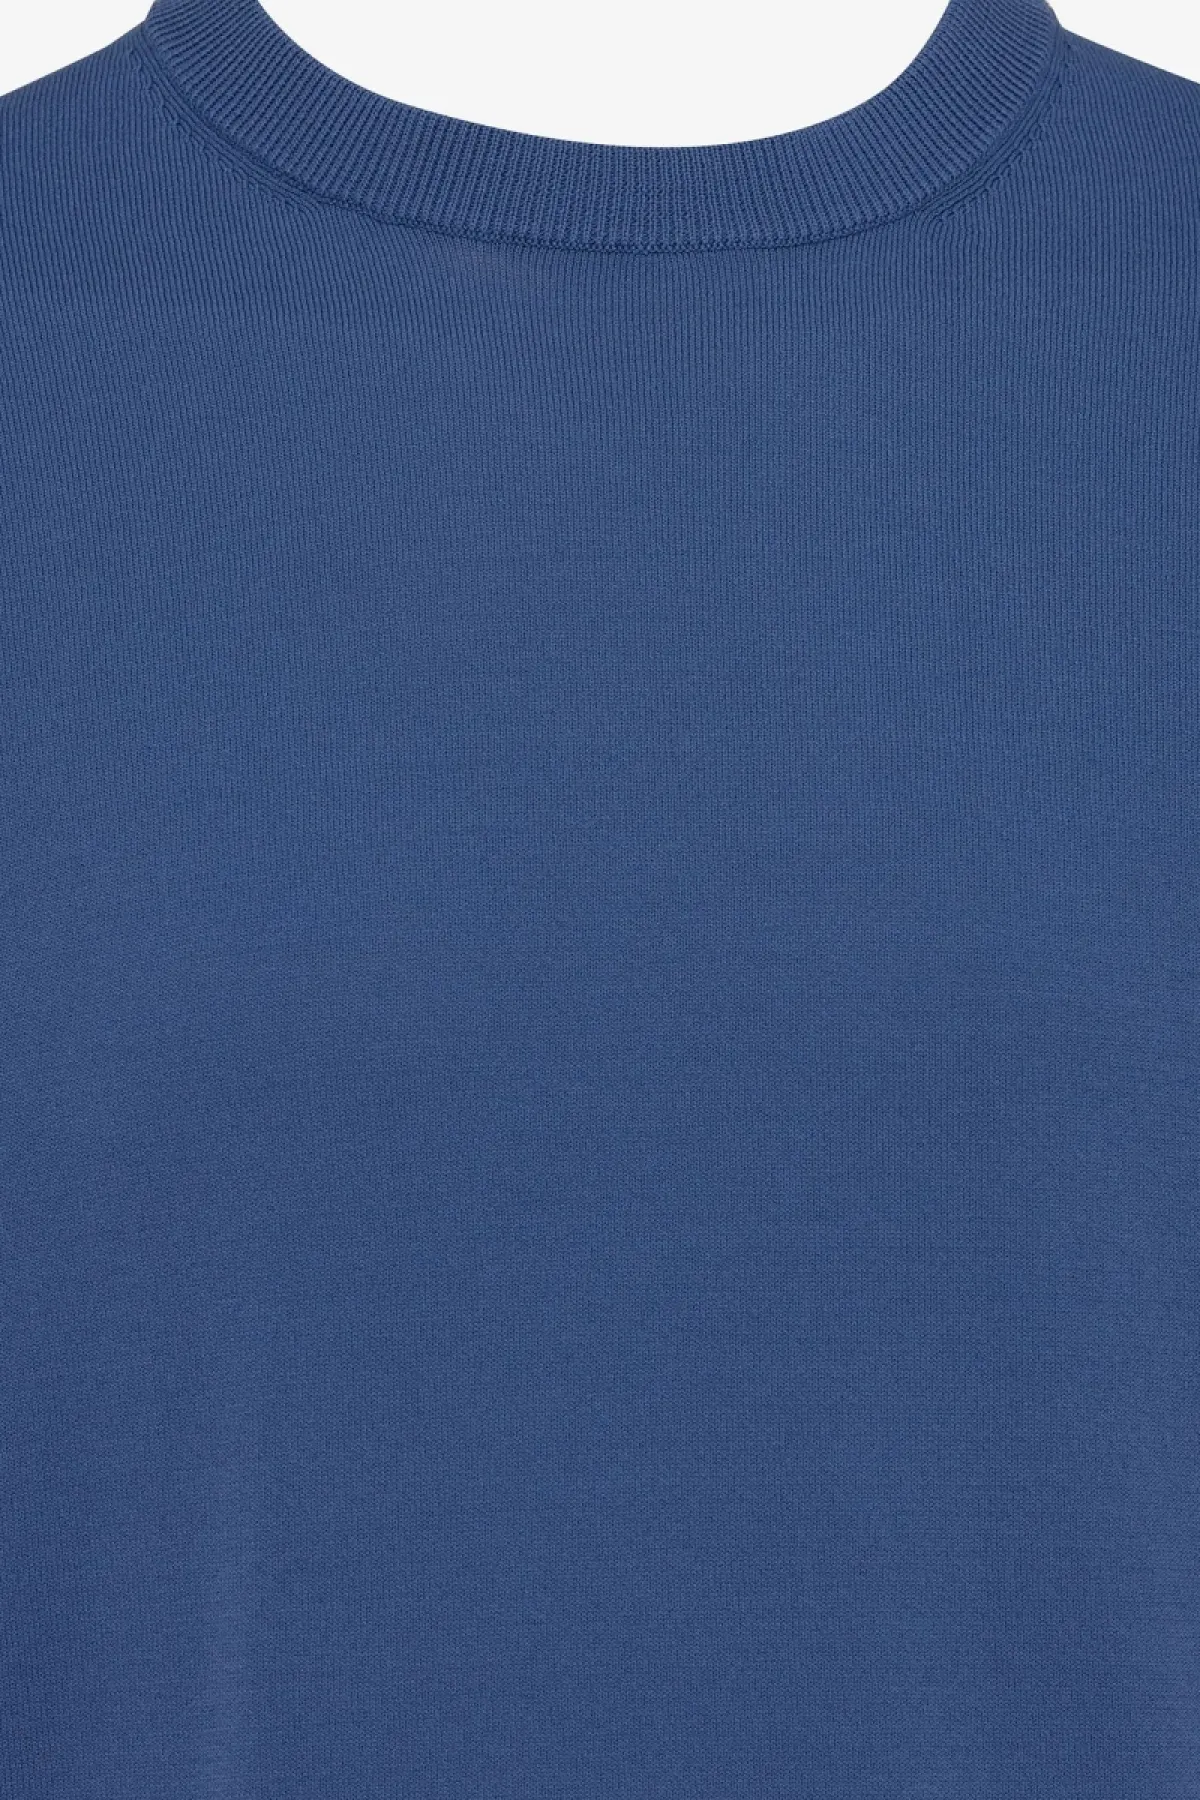 Cool dry t-shirt blauw